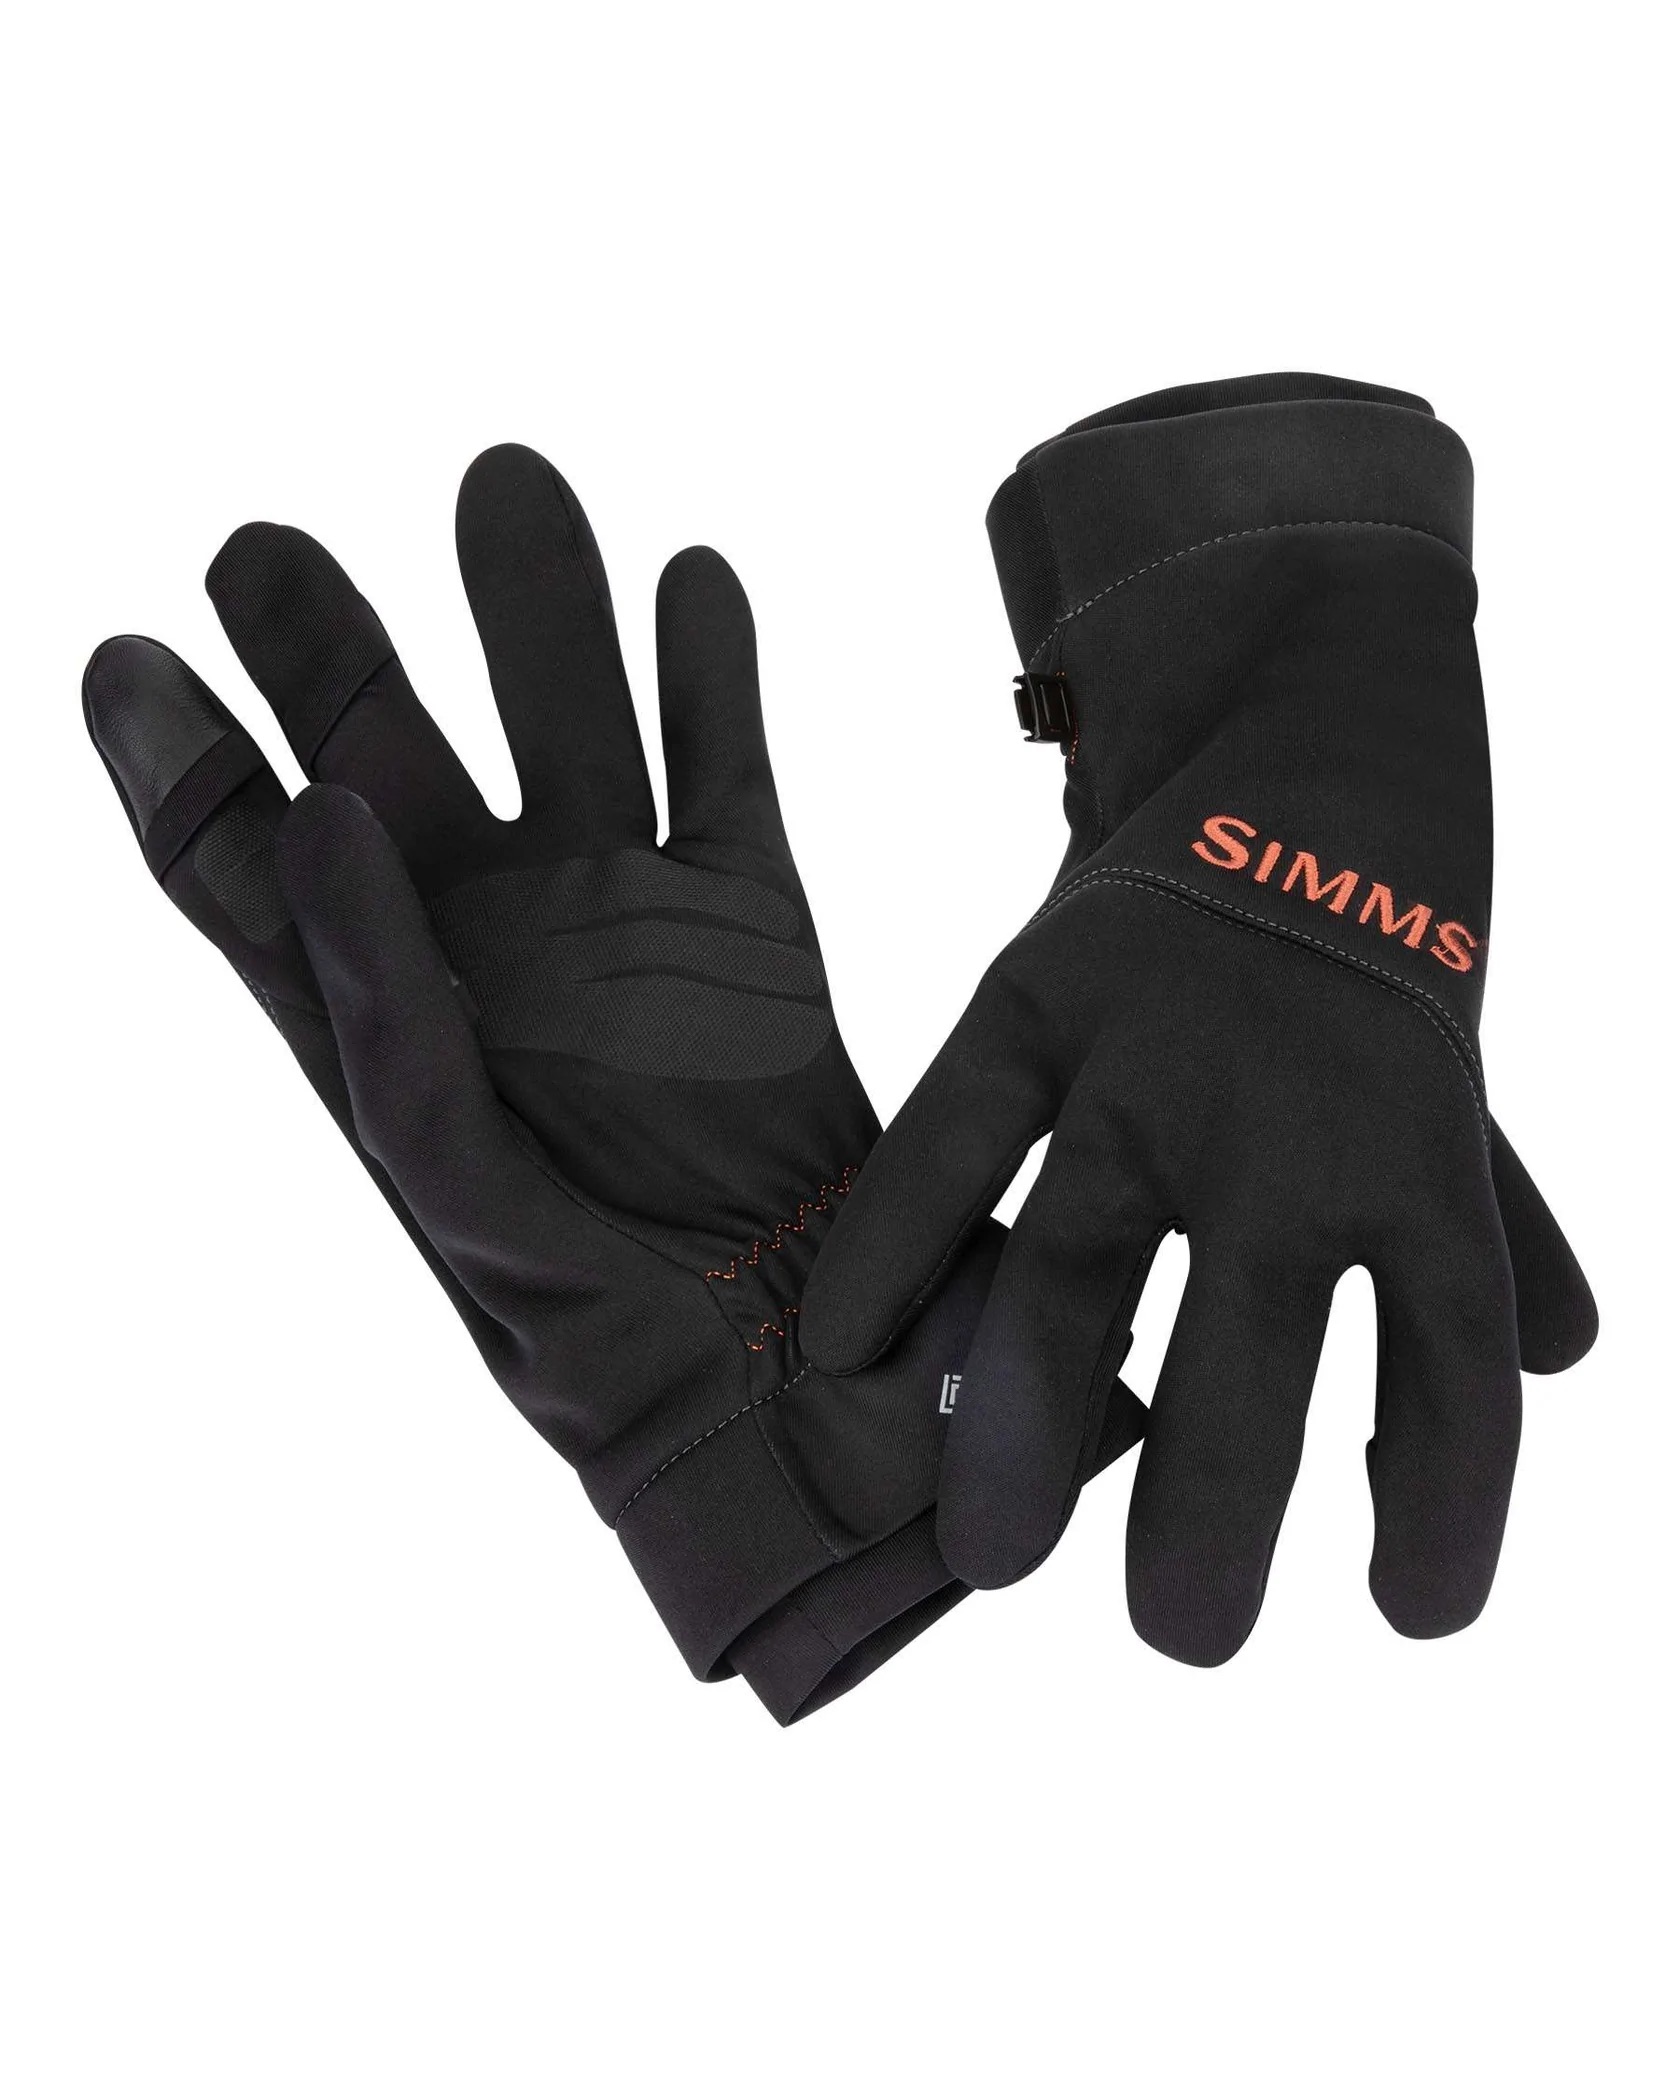 Simms GORE-TEX Infinium Flex Glove - Black - Extra Small